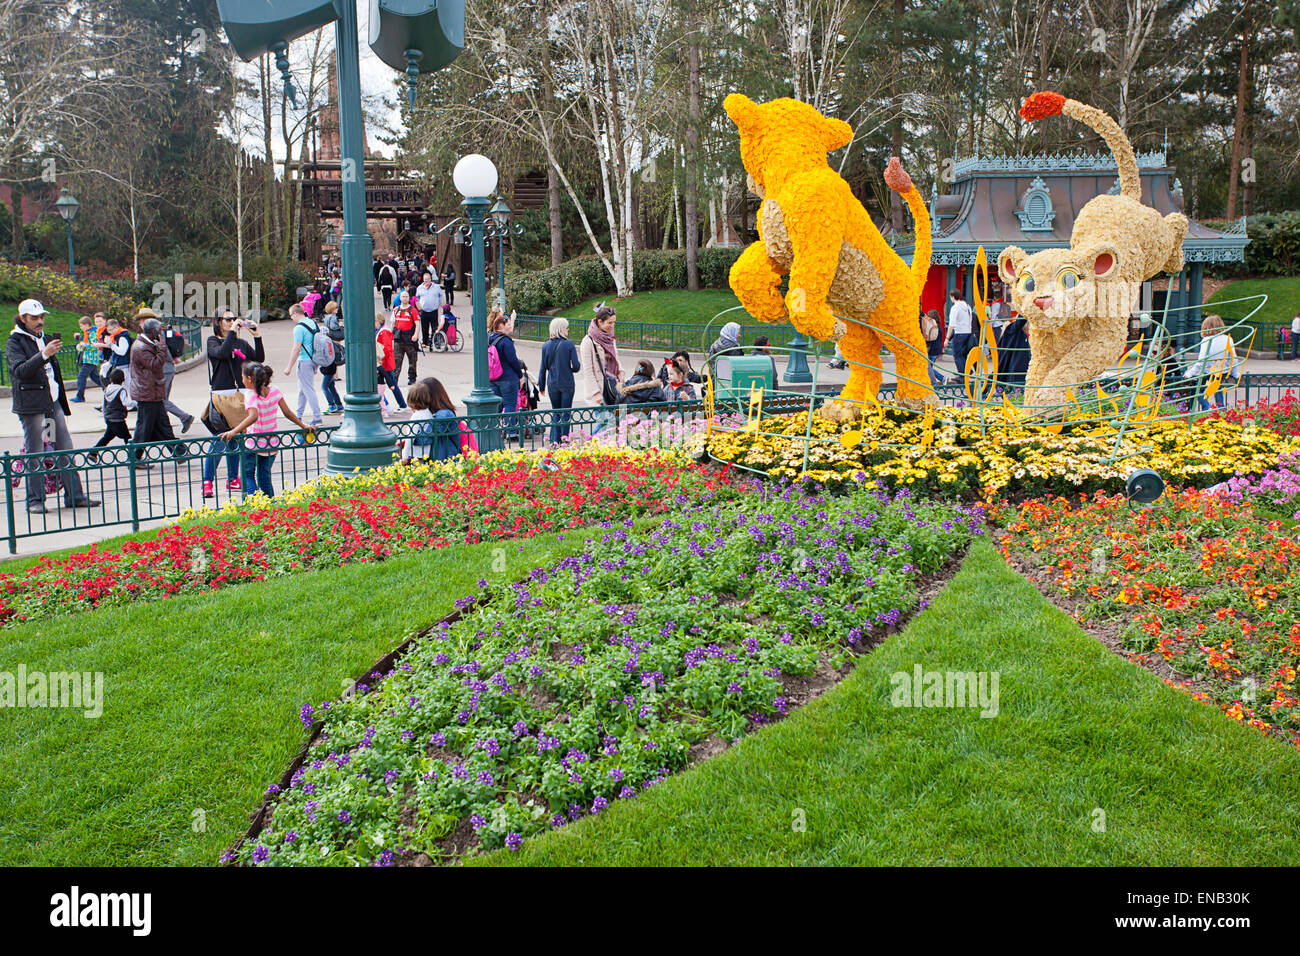 Fantasyland, Disneyland - Simba the Lion Stock Photo